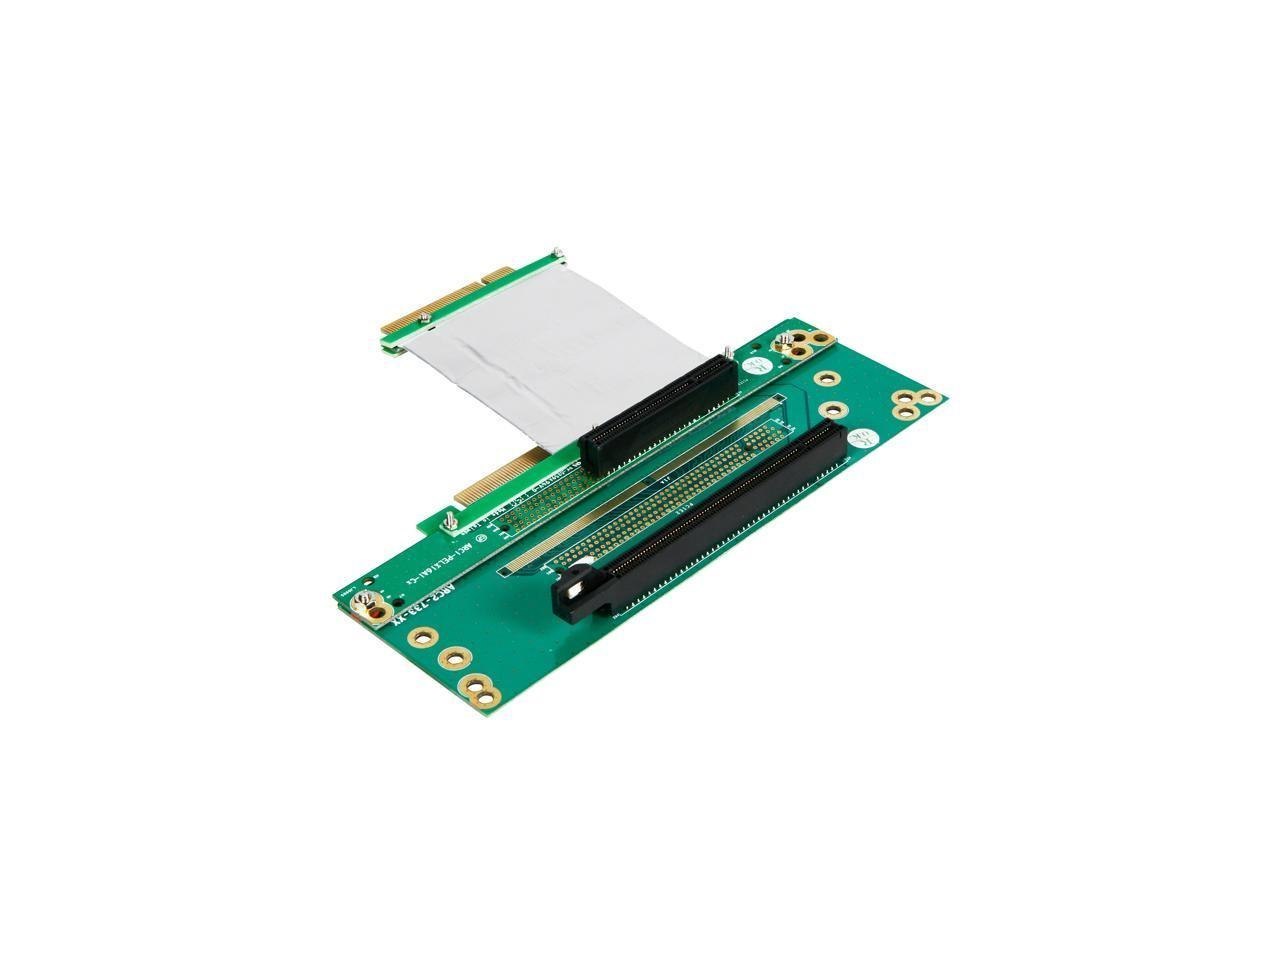 iStarUSA DD-603605-C7 1 PCIe X16 And 1 PCIe X8 Riser Card